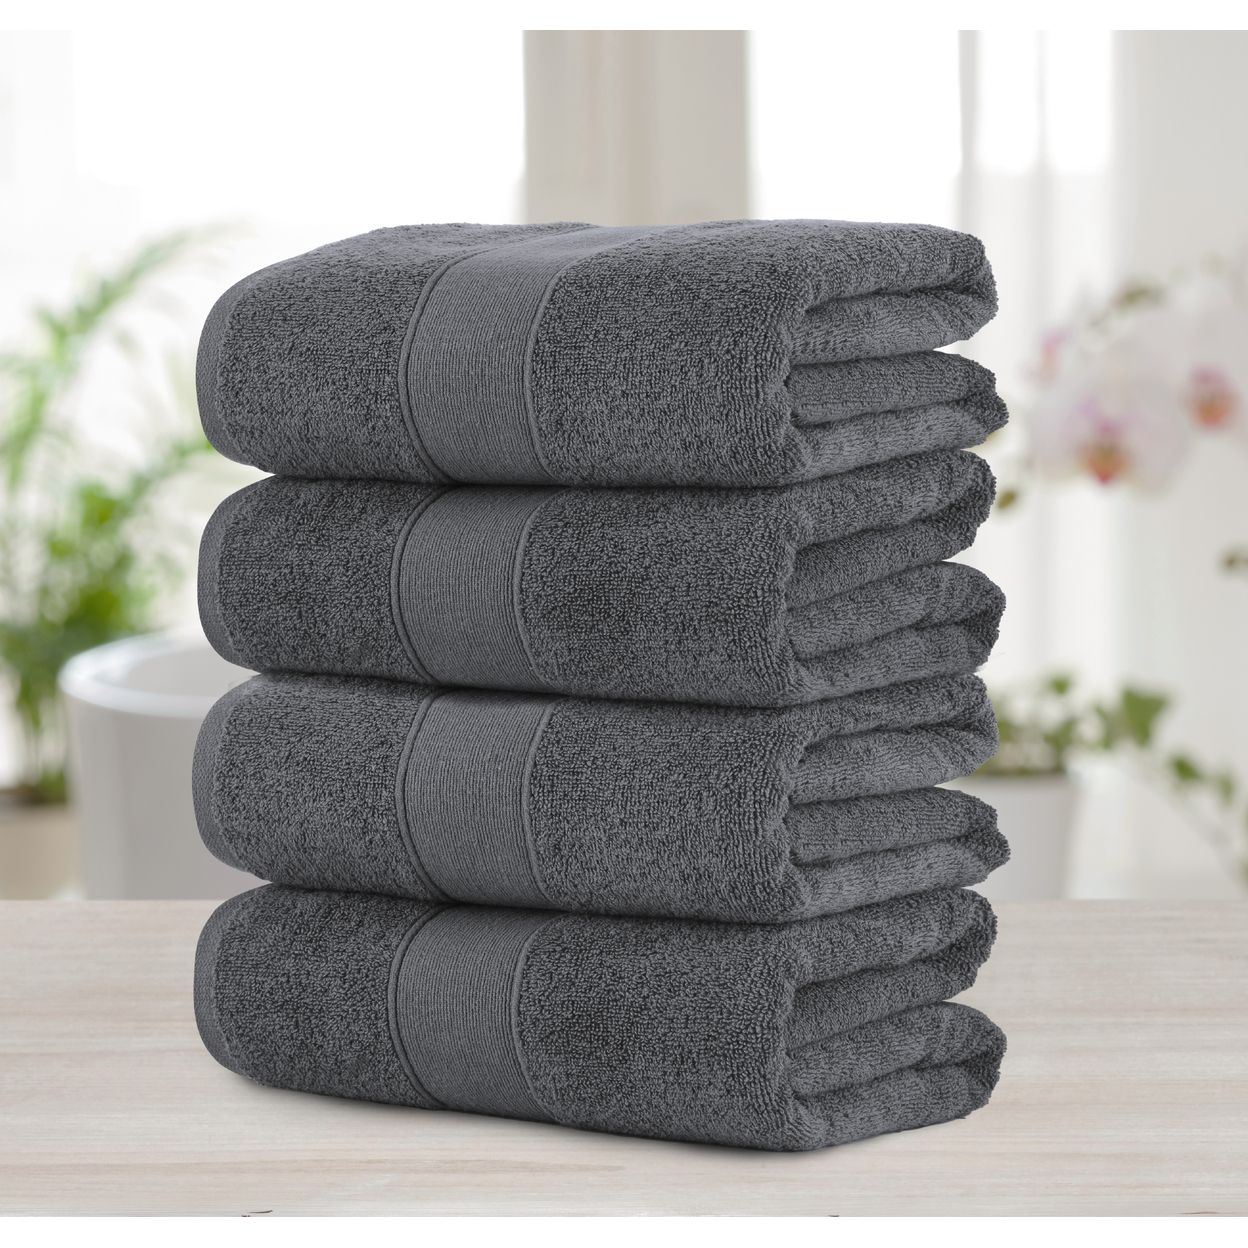 Chic Home Luxurious 4-Piece 100% Pure Turkish Cotton Bath Towels, 30 X 54, Dobby Border Design, OEKO-TEX Certified Set - Charcoal